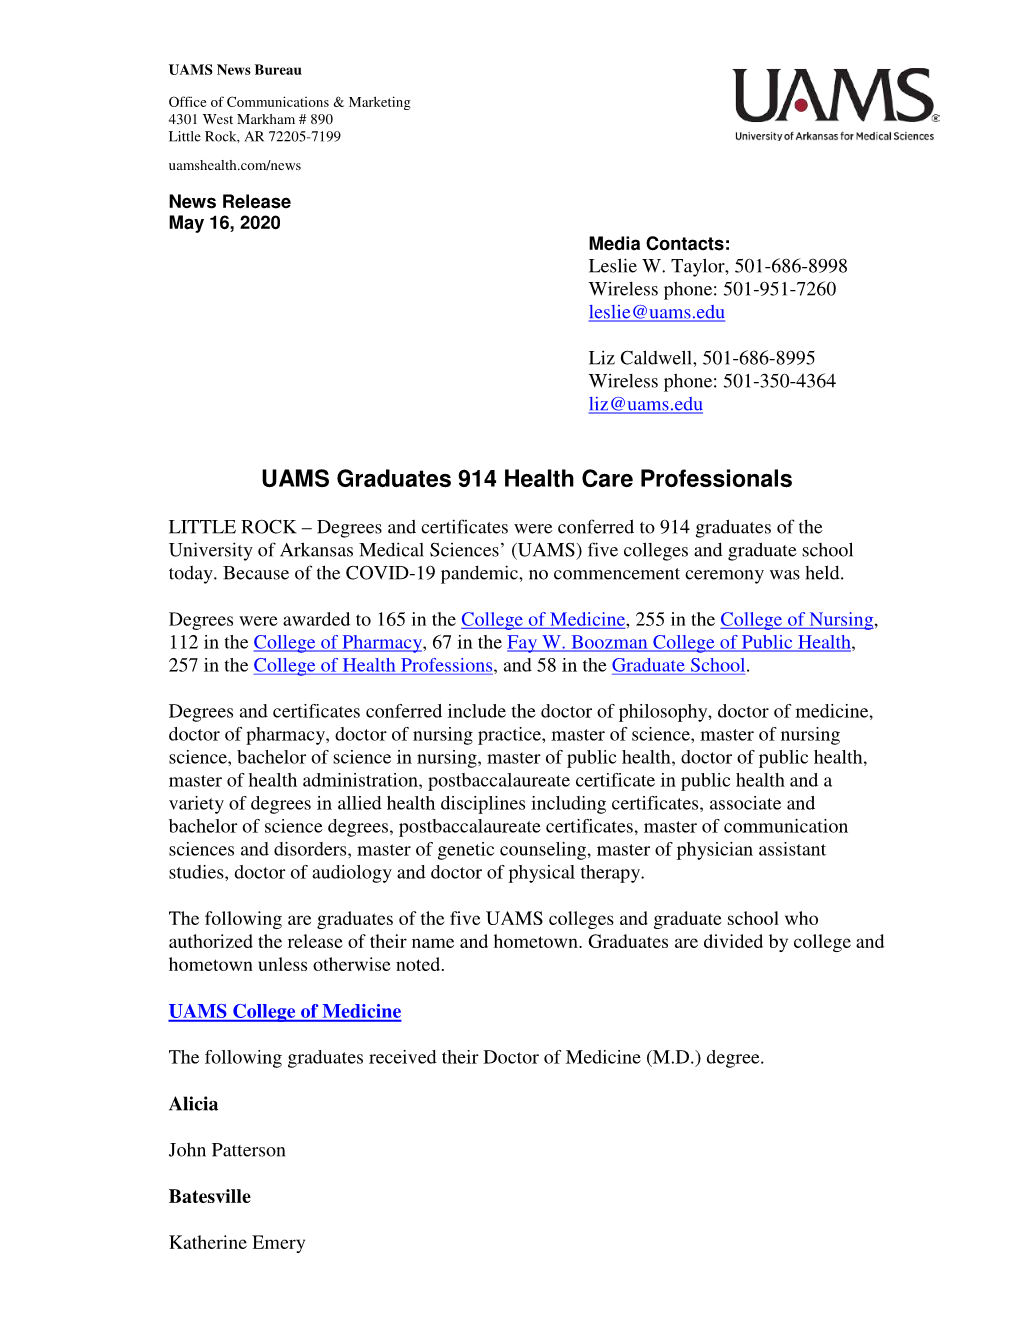 UAMS Graduates 914 Health Care Professionals